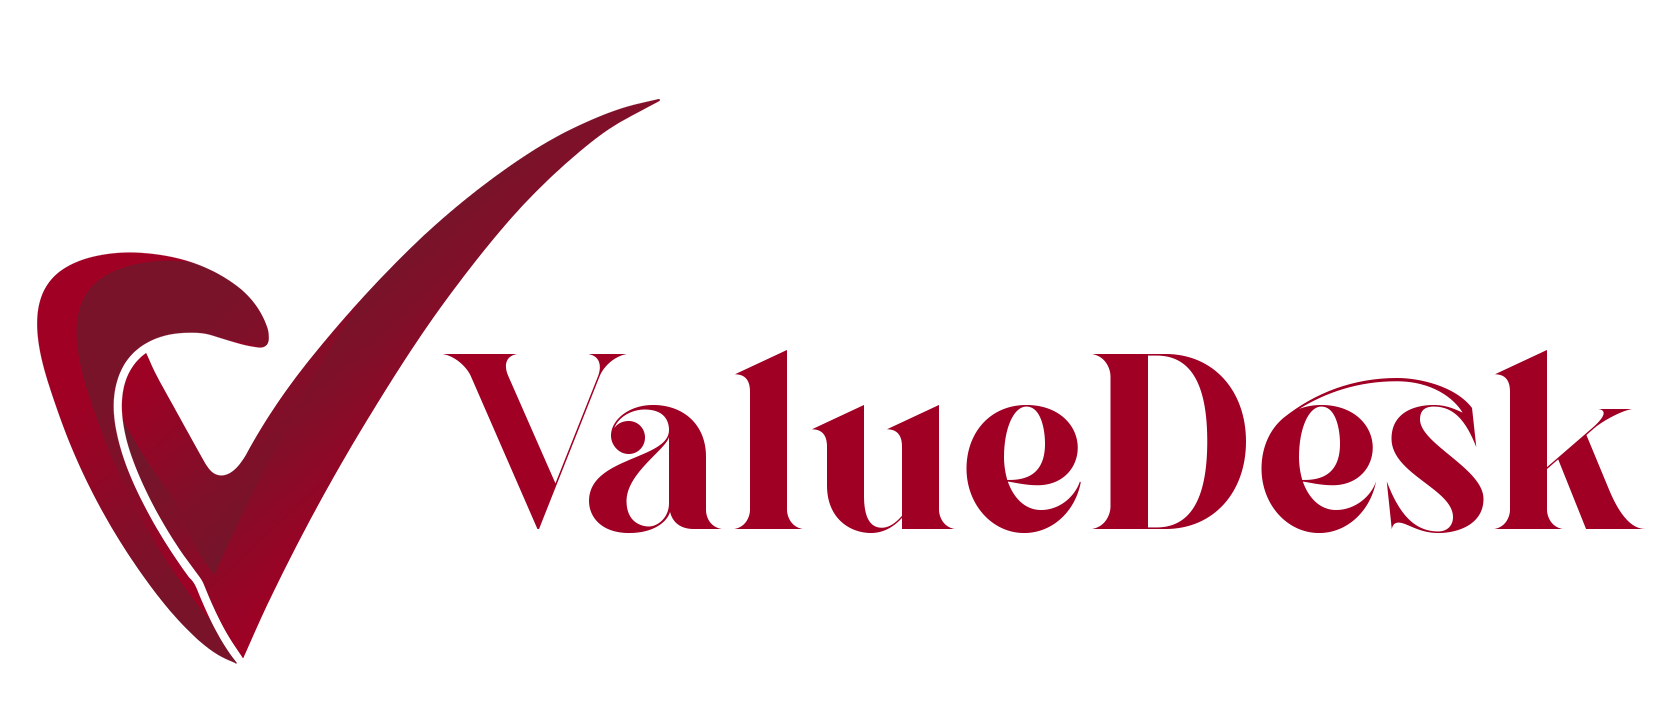 ValueDesk